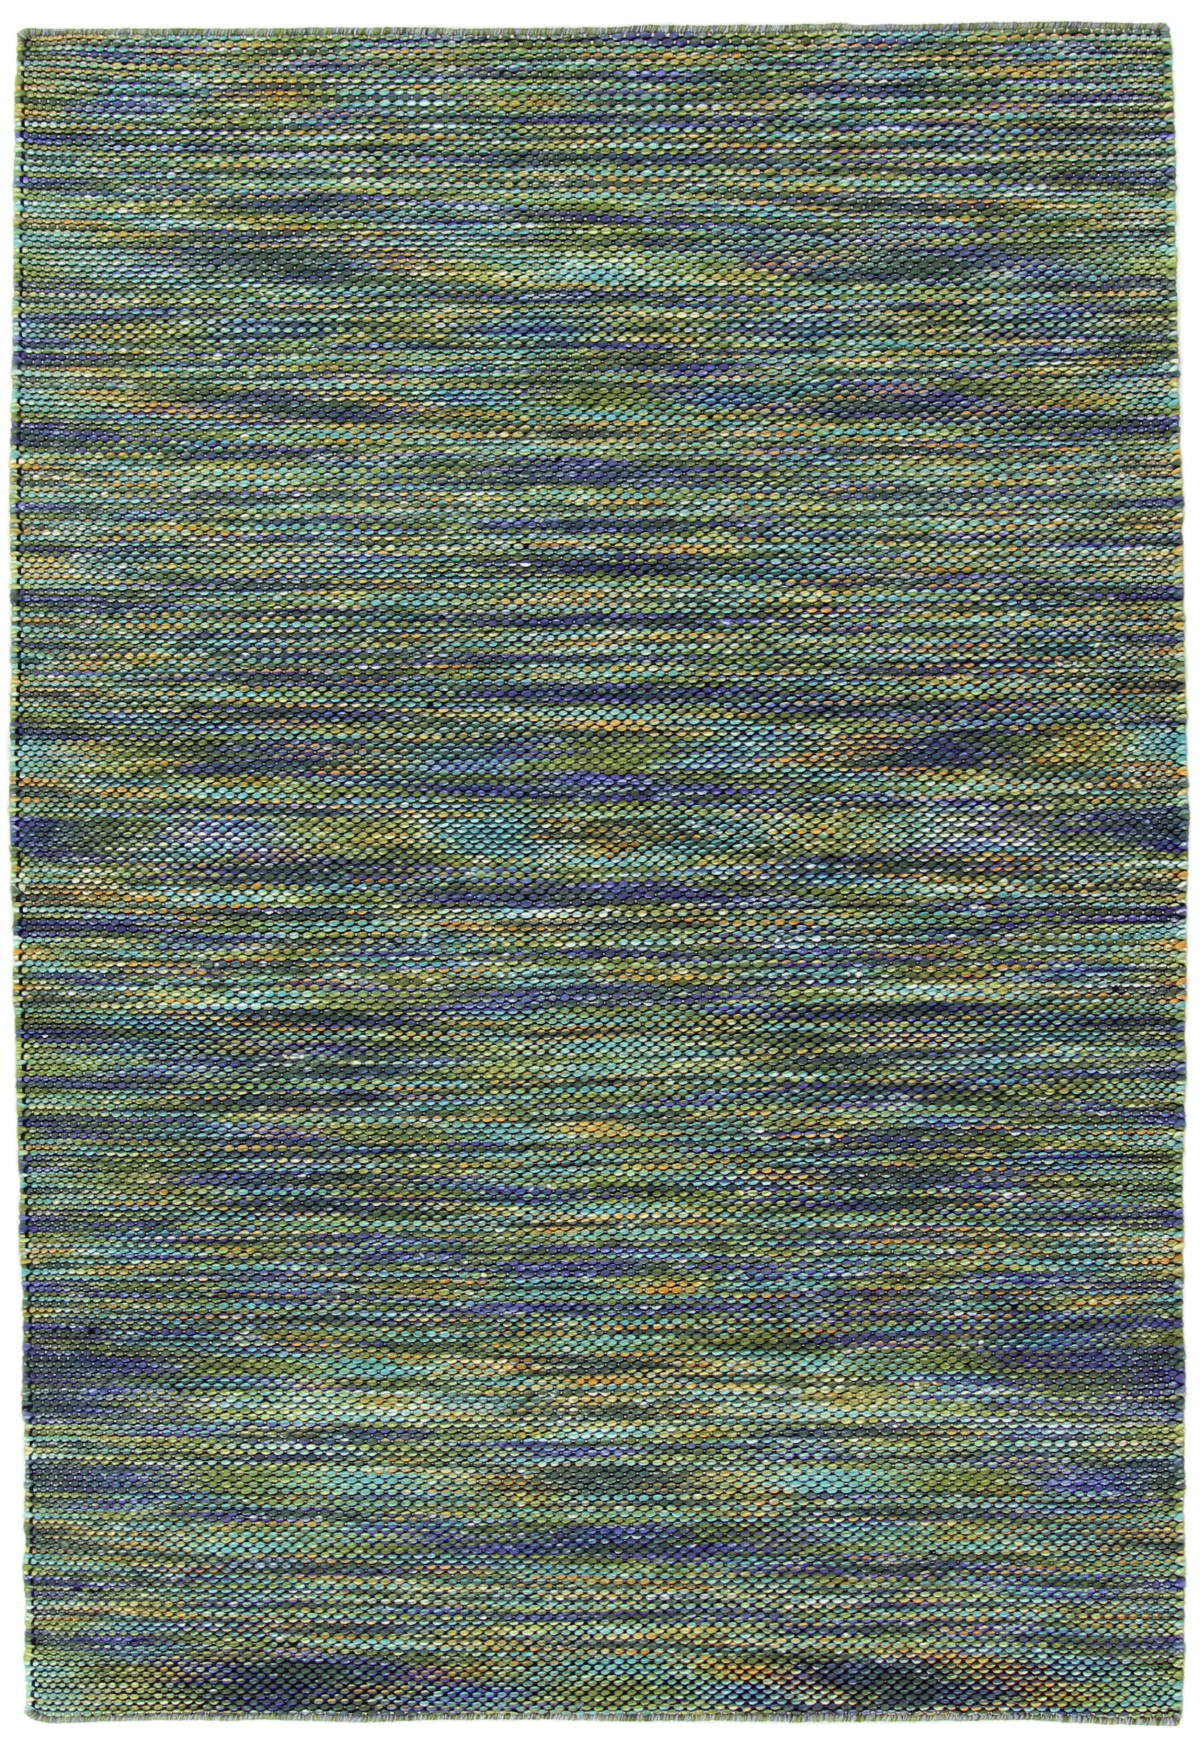 Brinker Carpets - Festival Spotlight Green Multi - 160x230 cm Vloerkleed